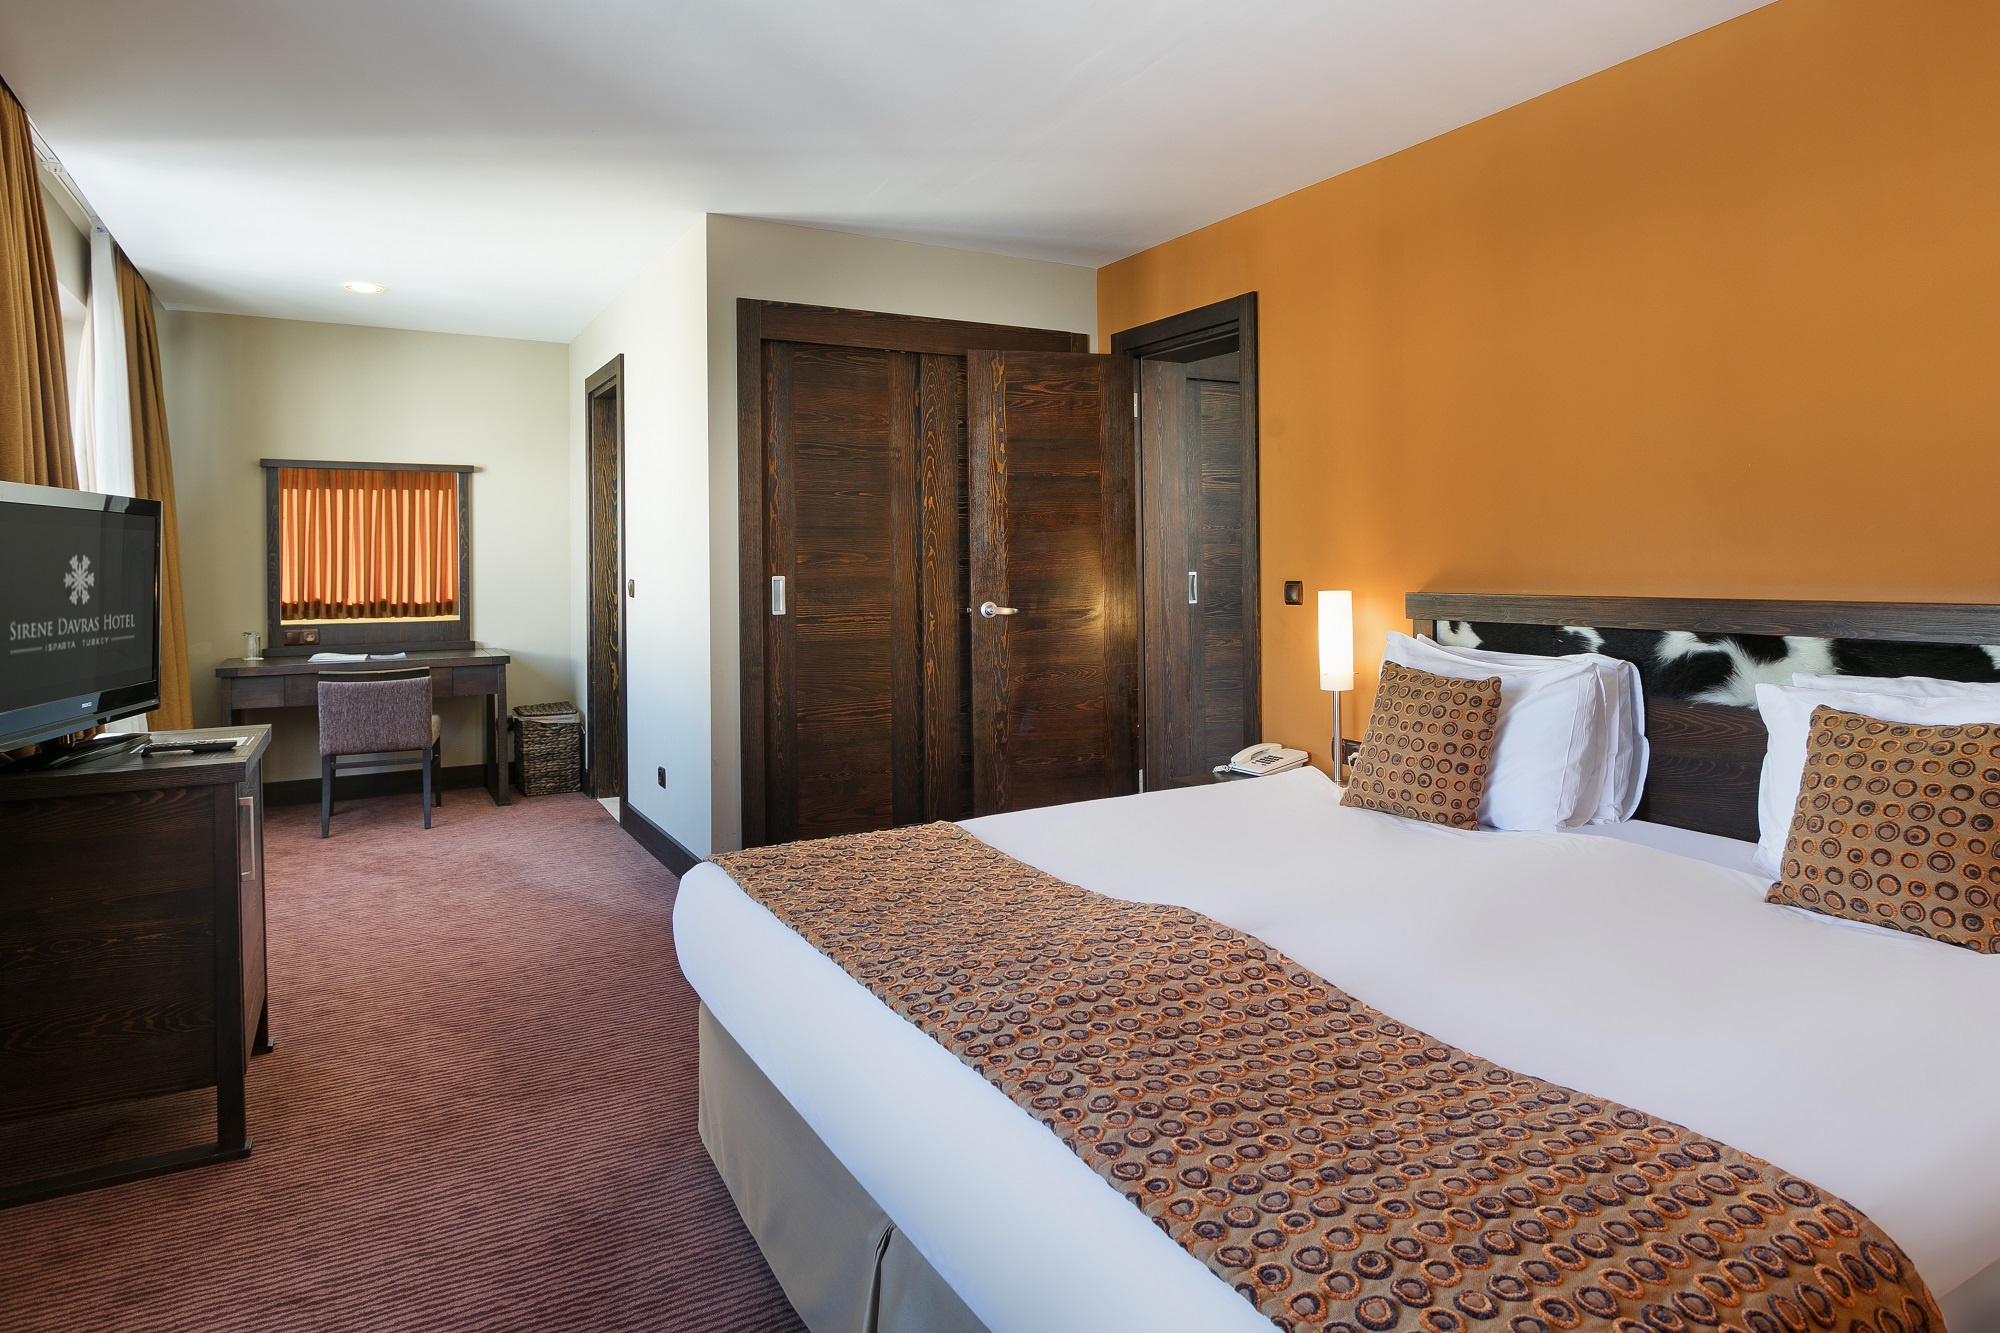 Sirene Davras Hotel One Bedroom Suite